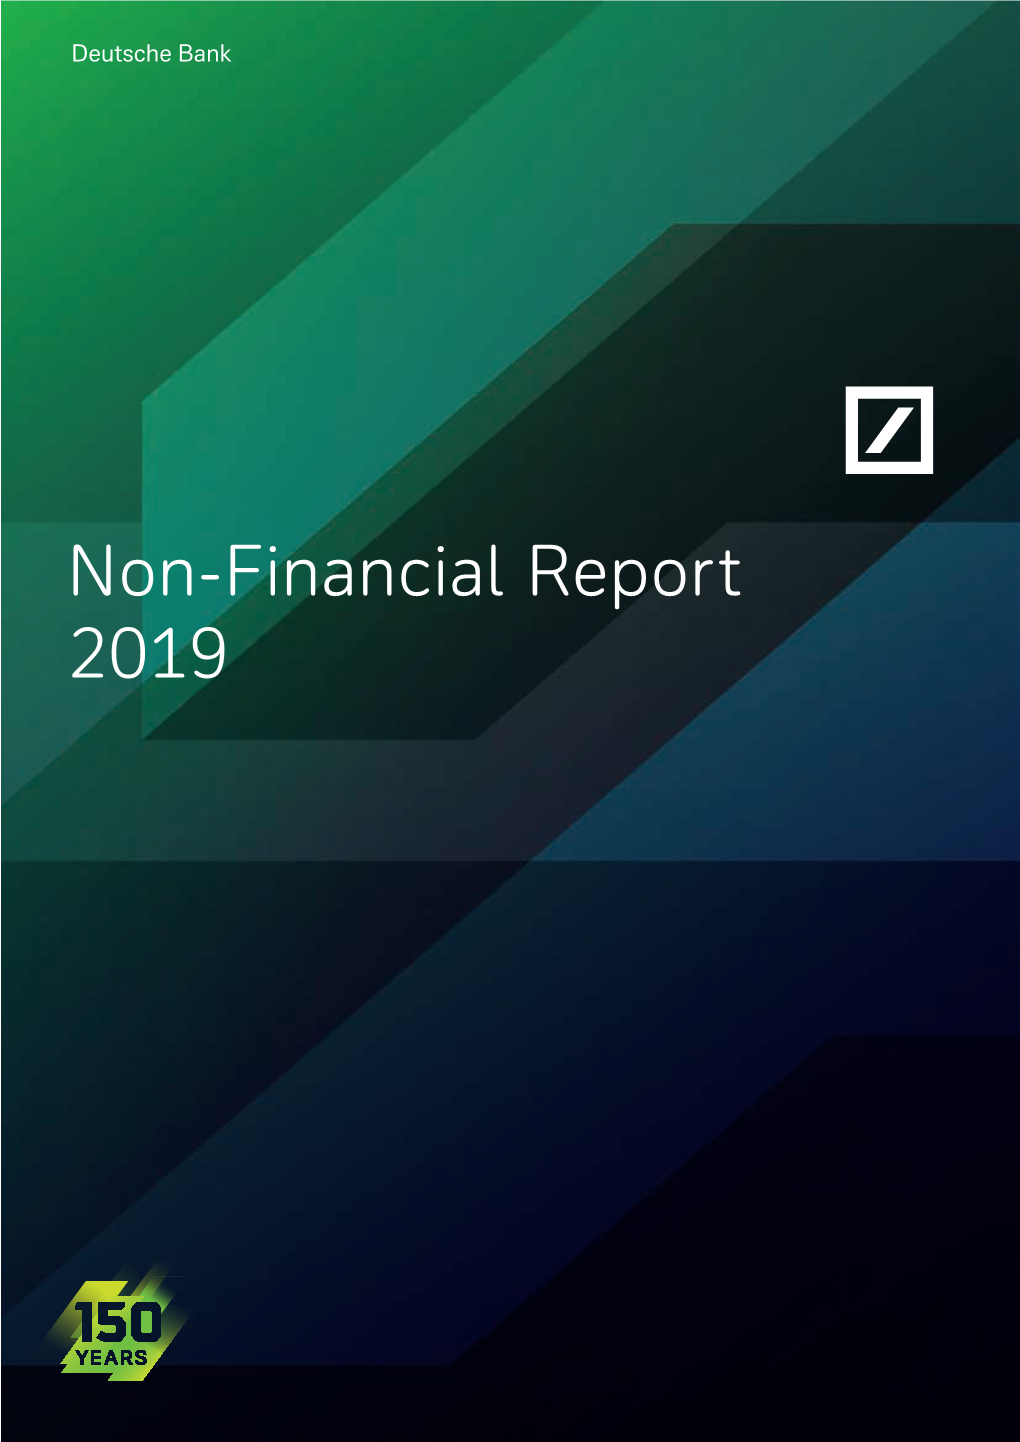 Non-Financial Report 2019 Contents